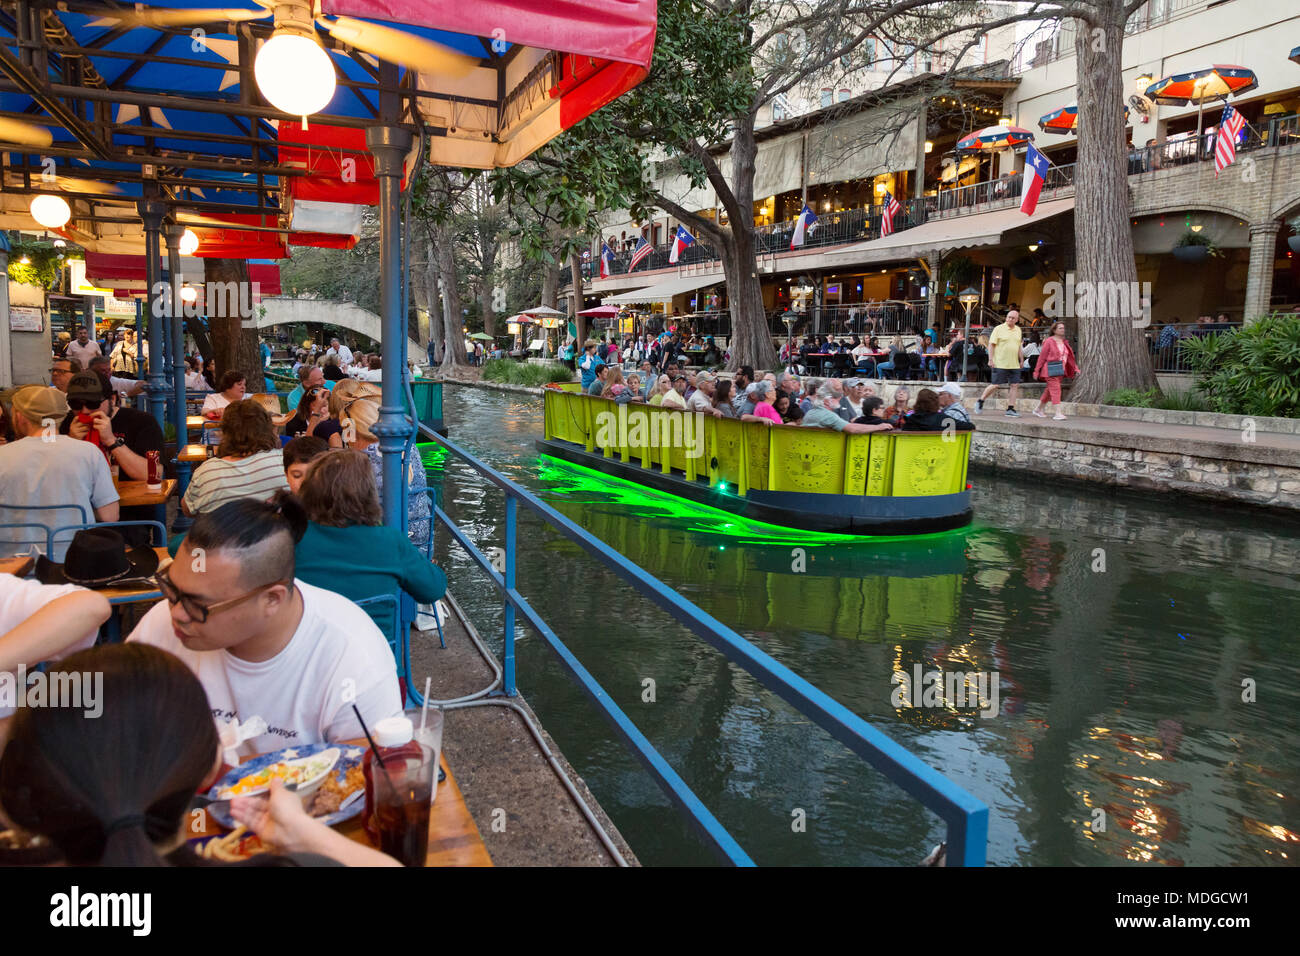 San Antonio Texas - San Antonio River Walk at night - people in restaurants and on boats; San Antonio, Texas USA Stock Photo